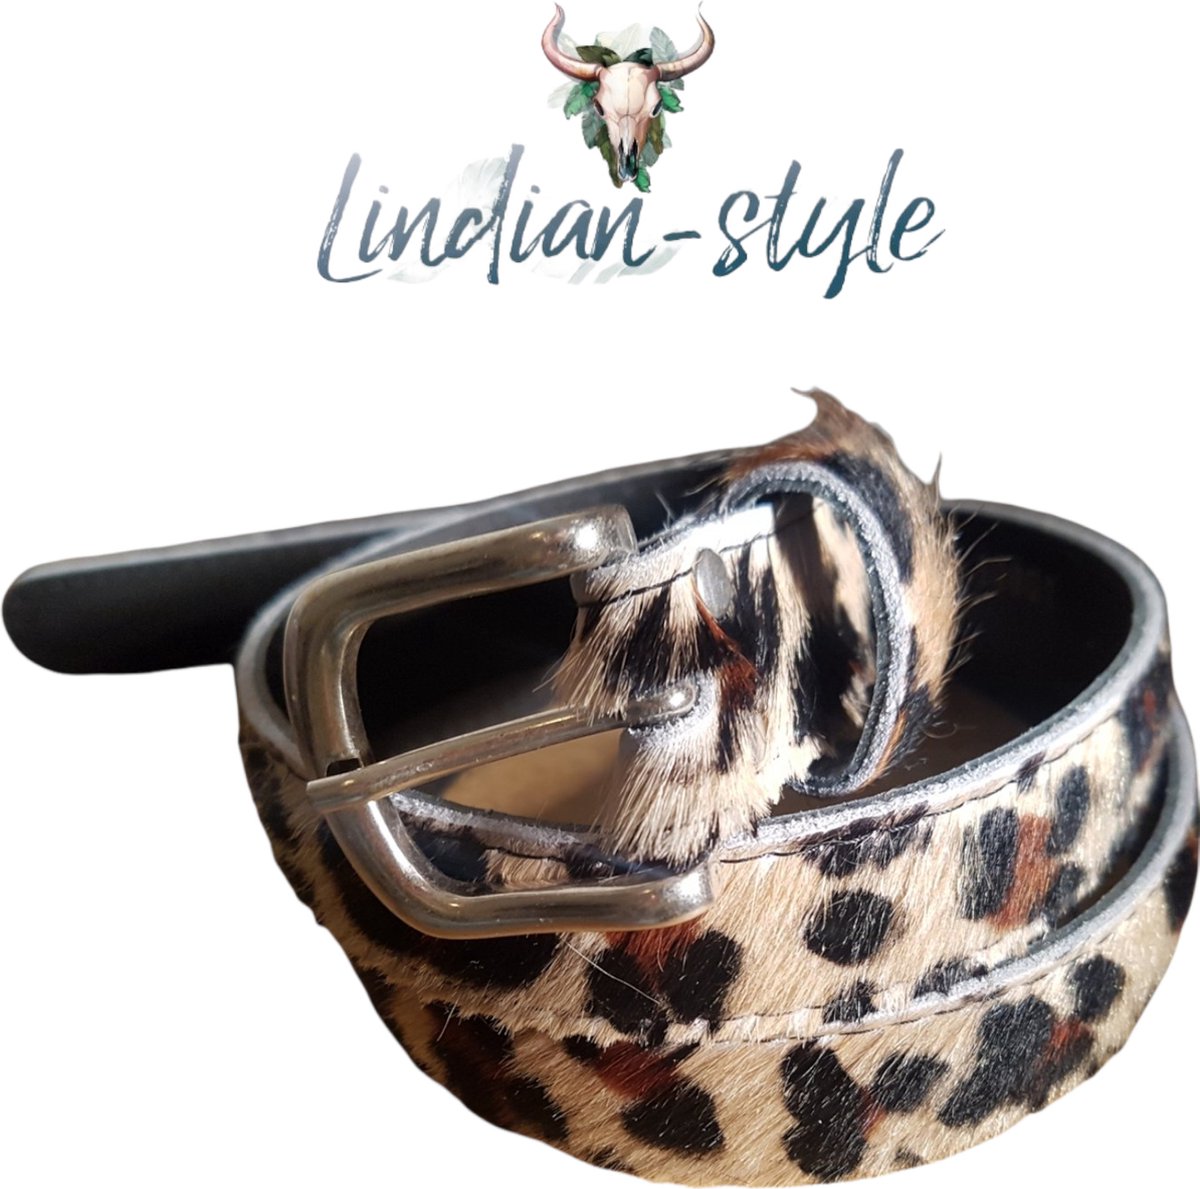 Koeienhuid riem ceintuur - 85 cm - panter/leopard - Lindian style